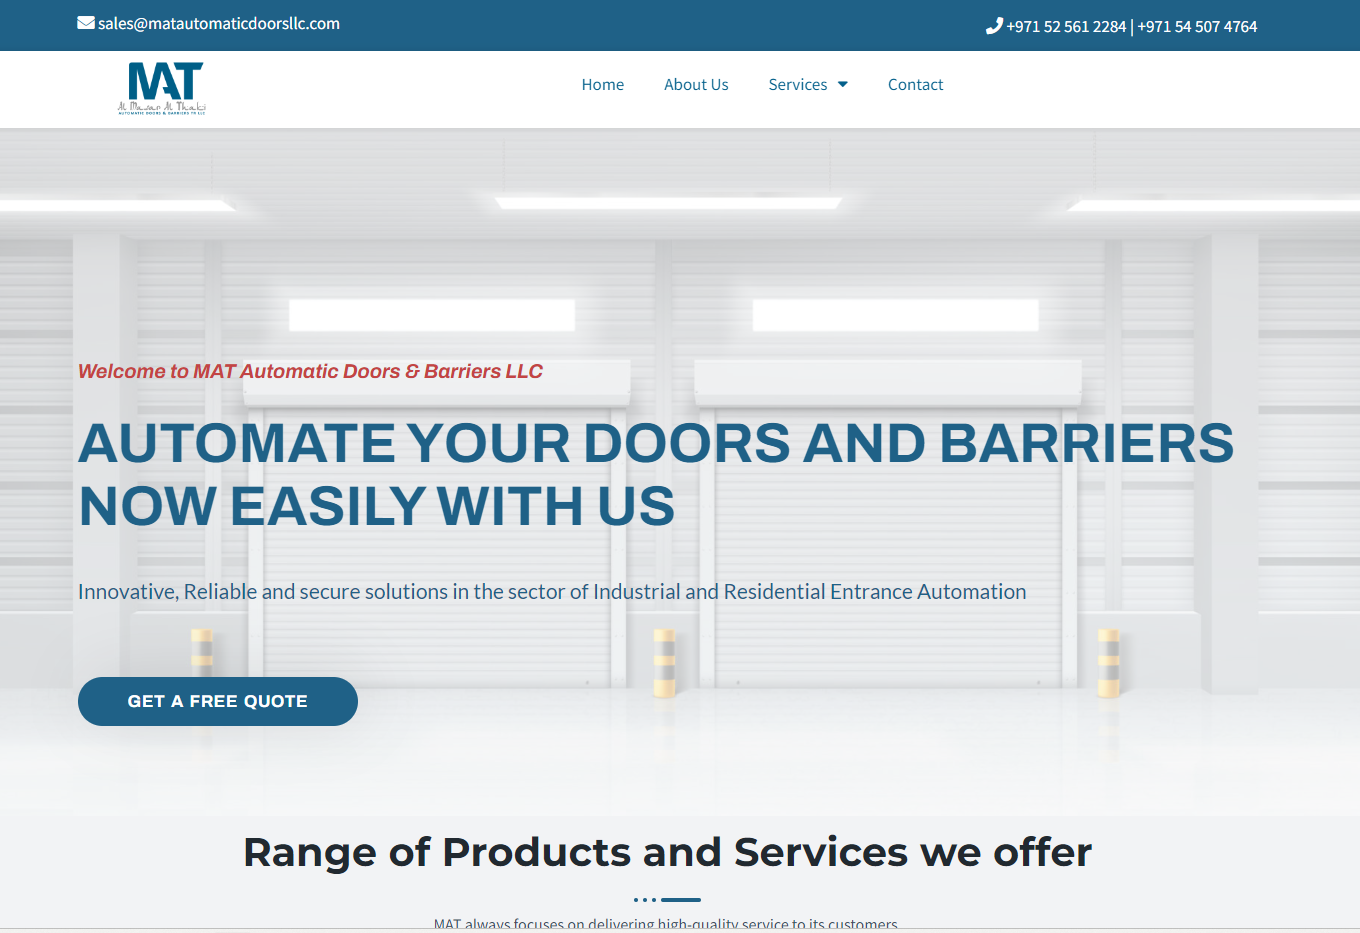 MAT Automatic Doors & Barriers LLC